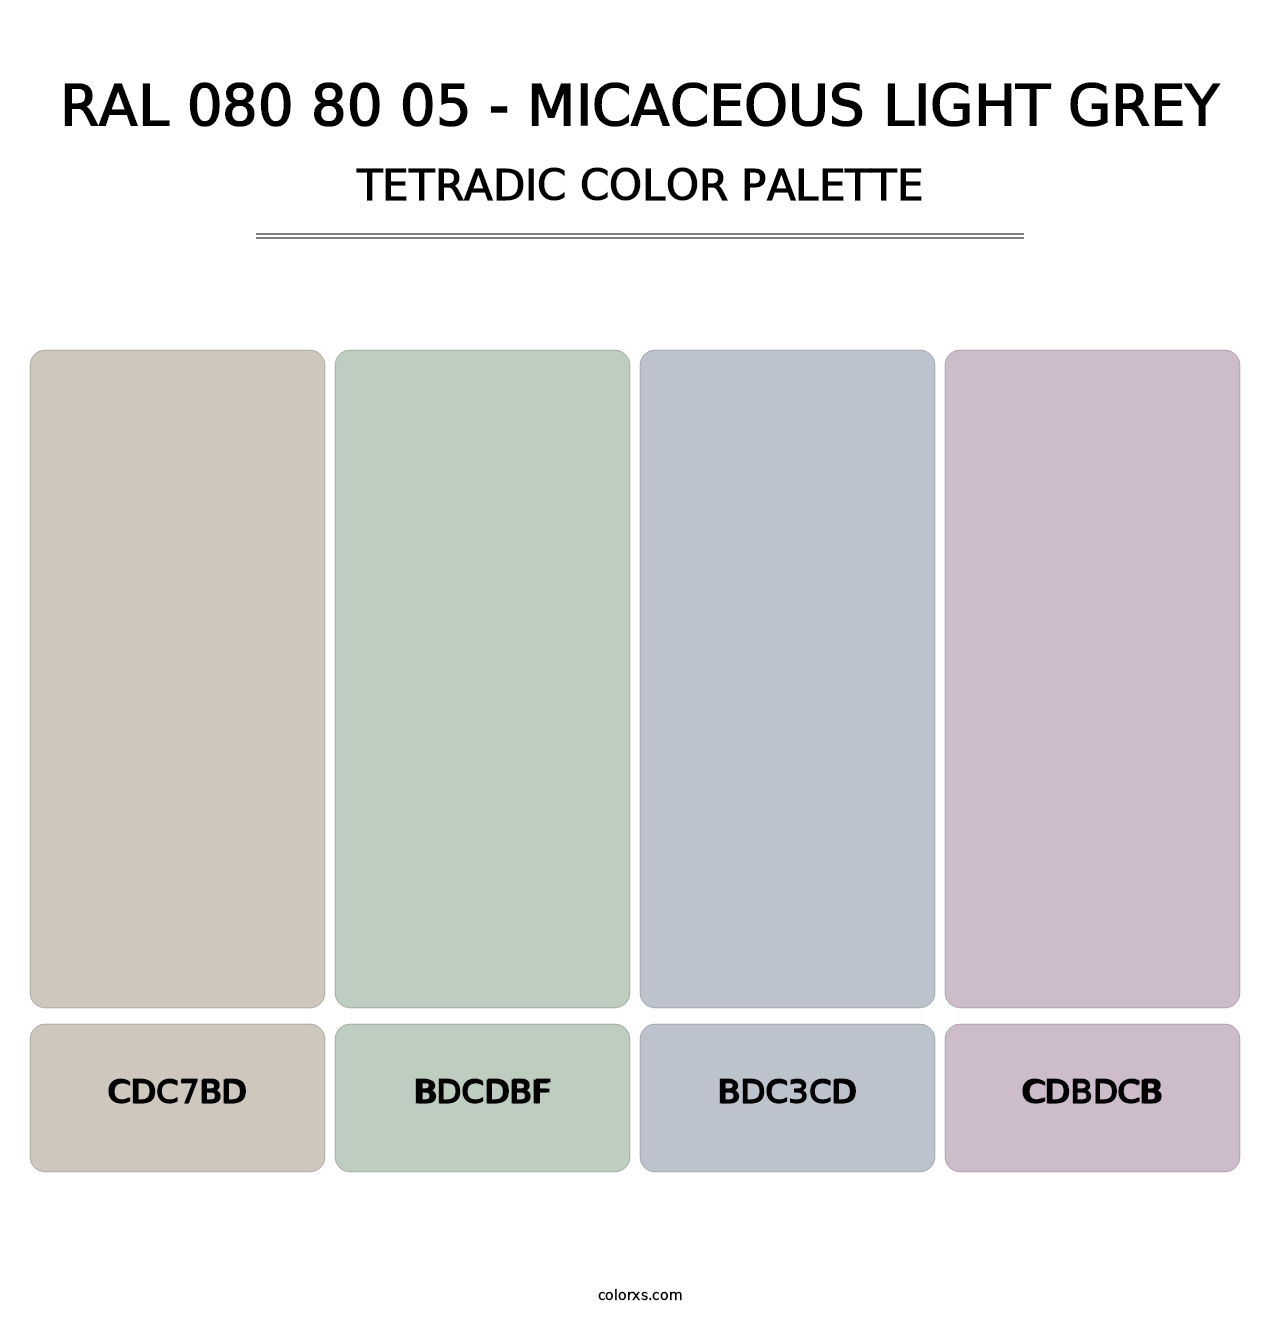 RAL 080 80 05 - Micaceous Light Grey - Tetradic Color Palette